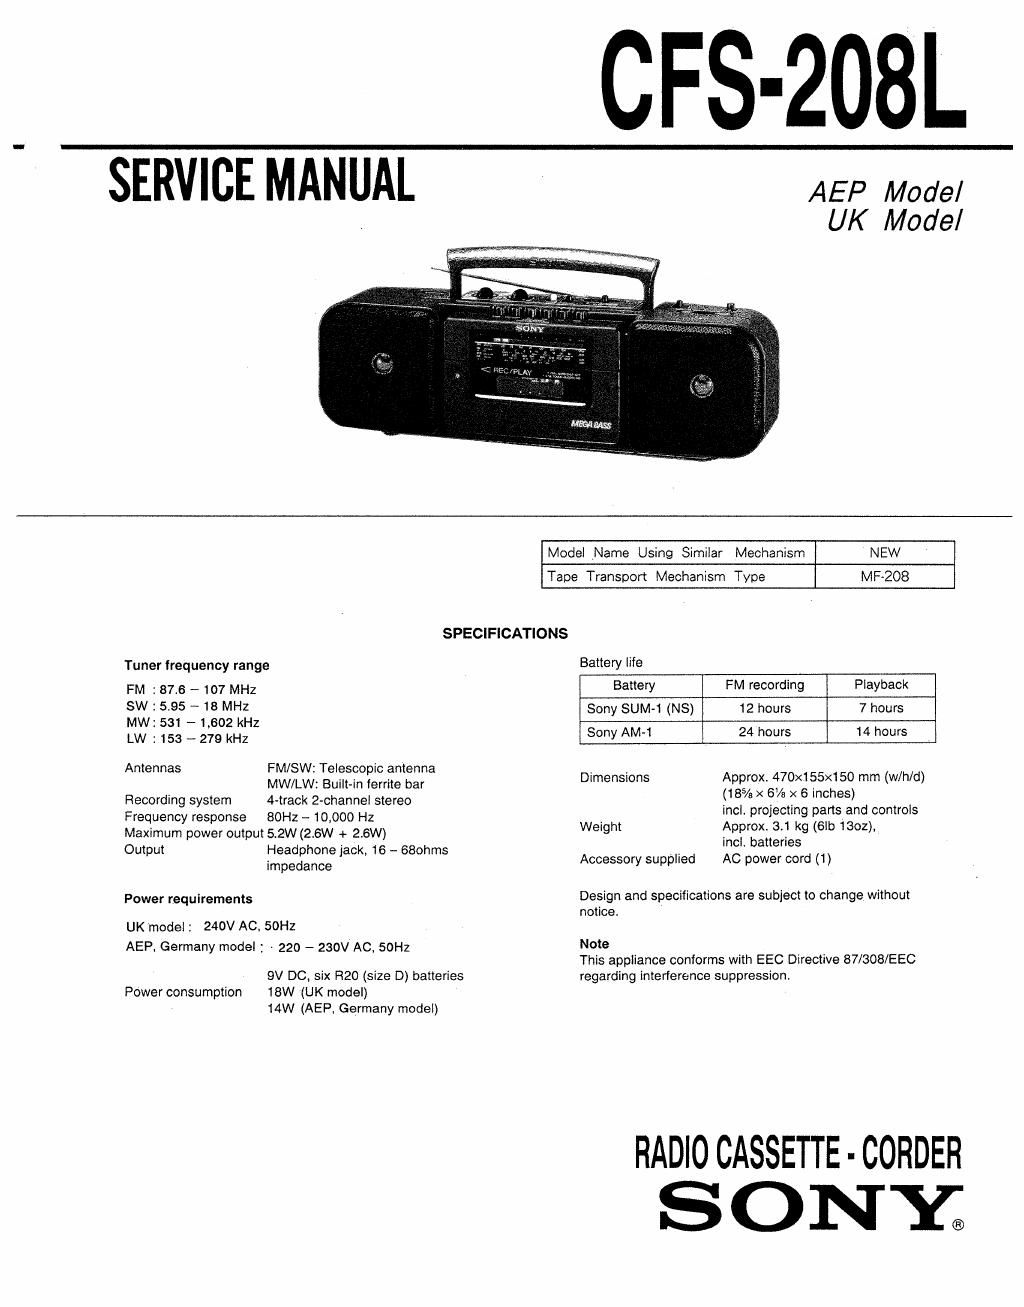 sony cfs 208 l service manual